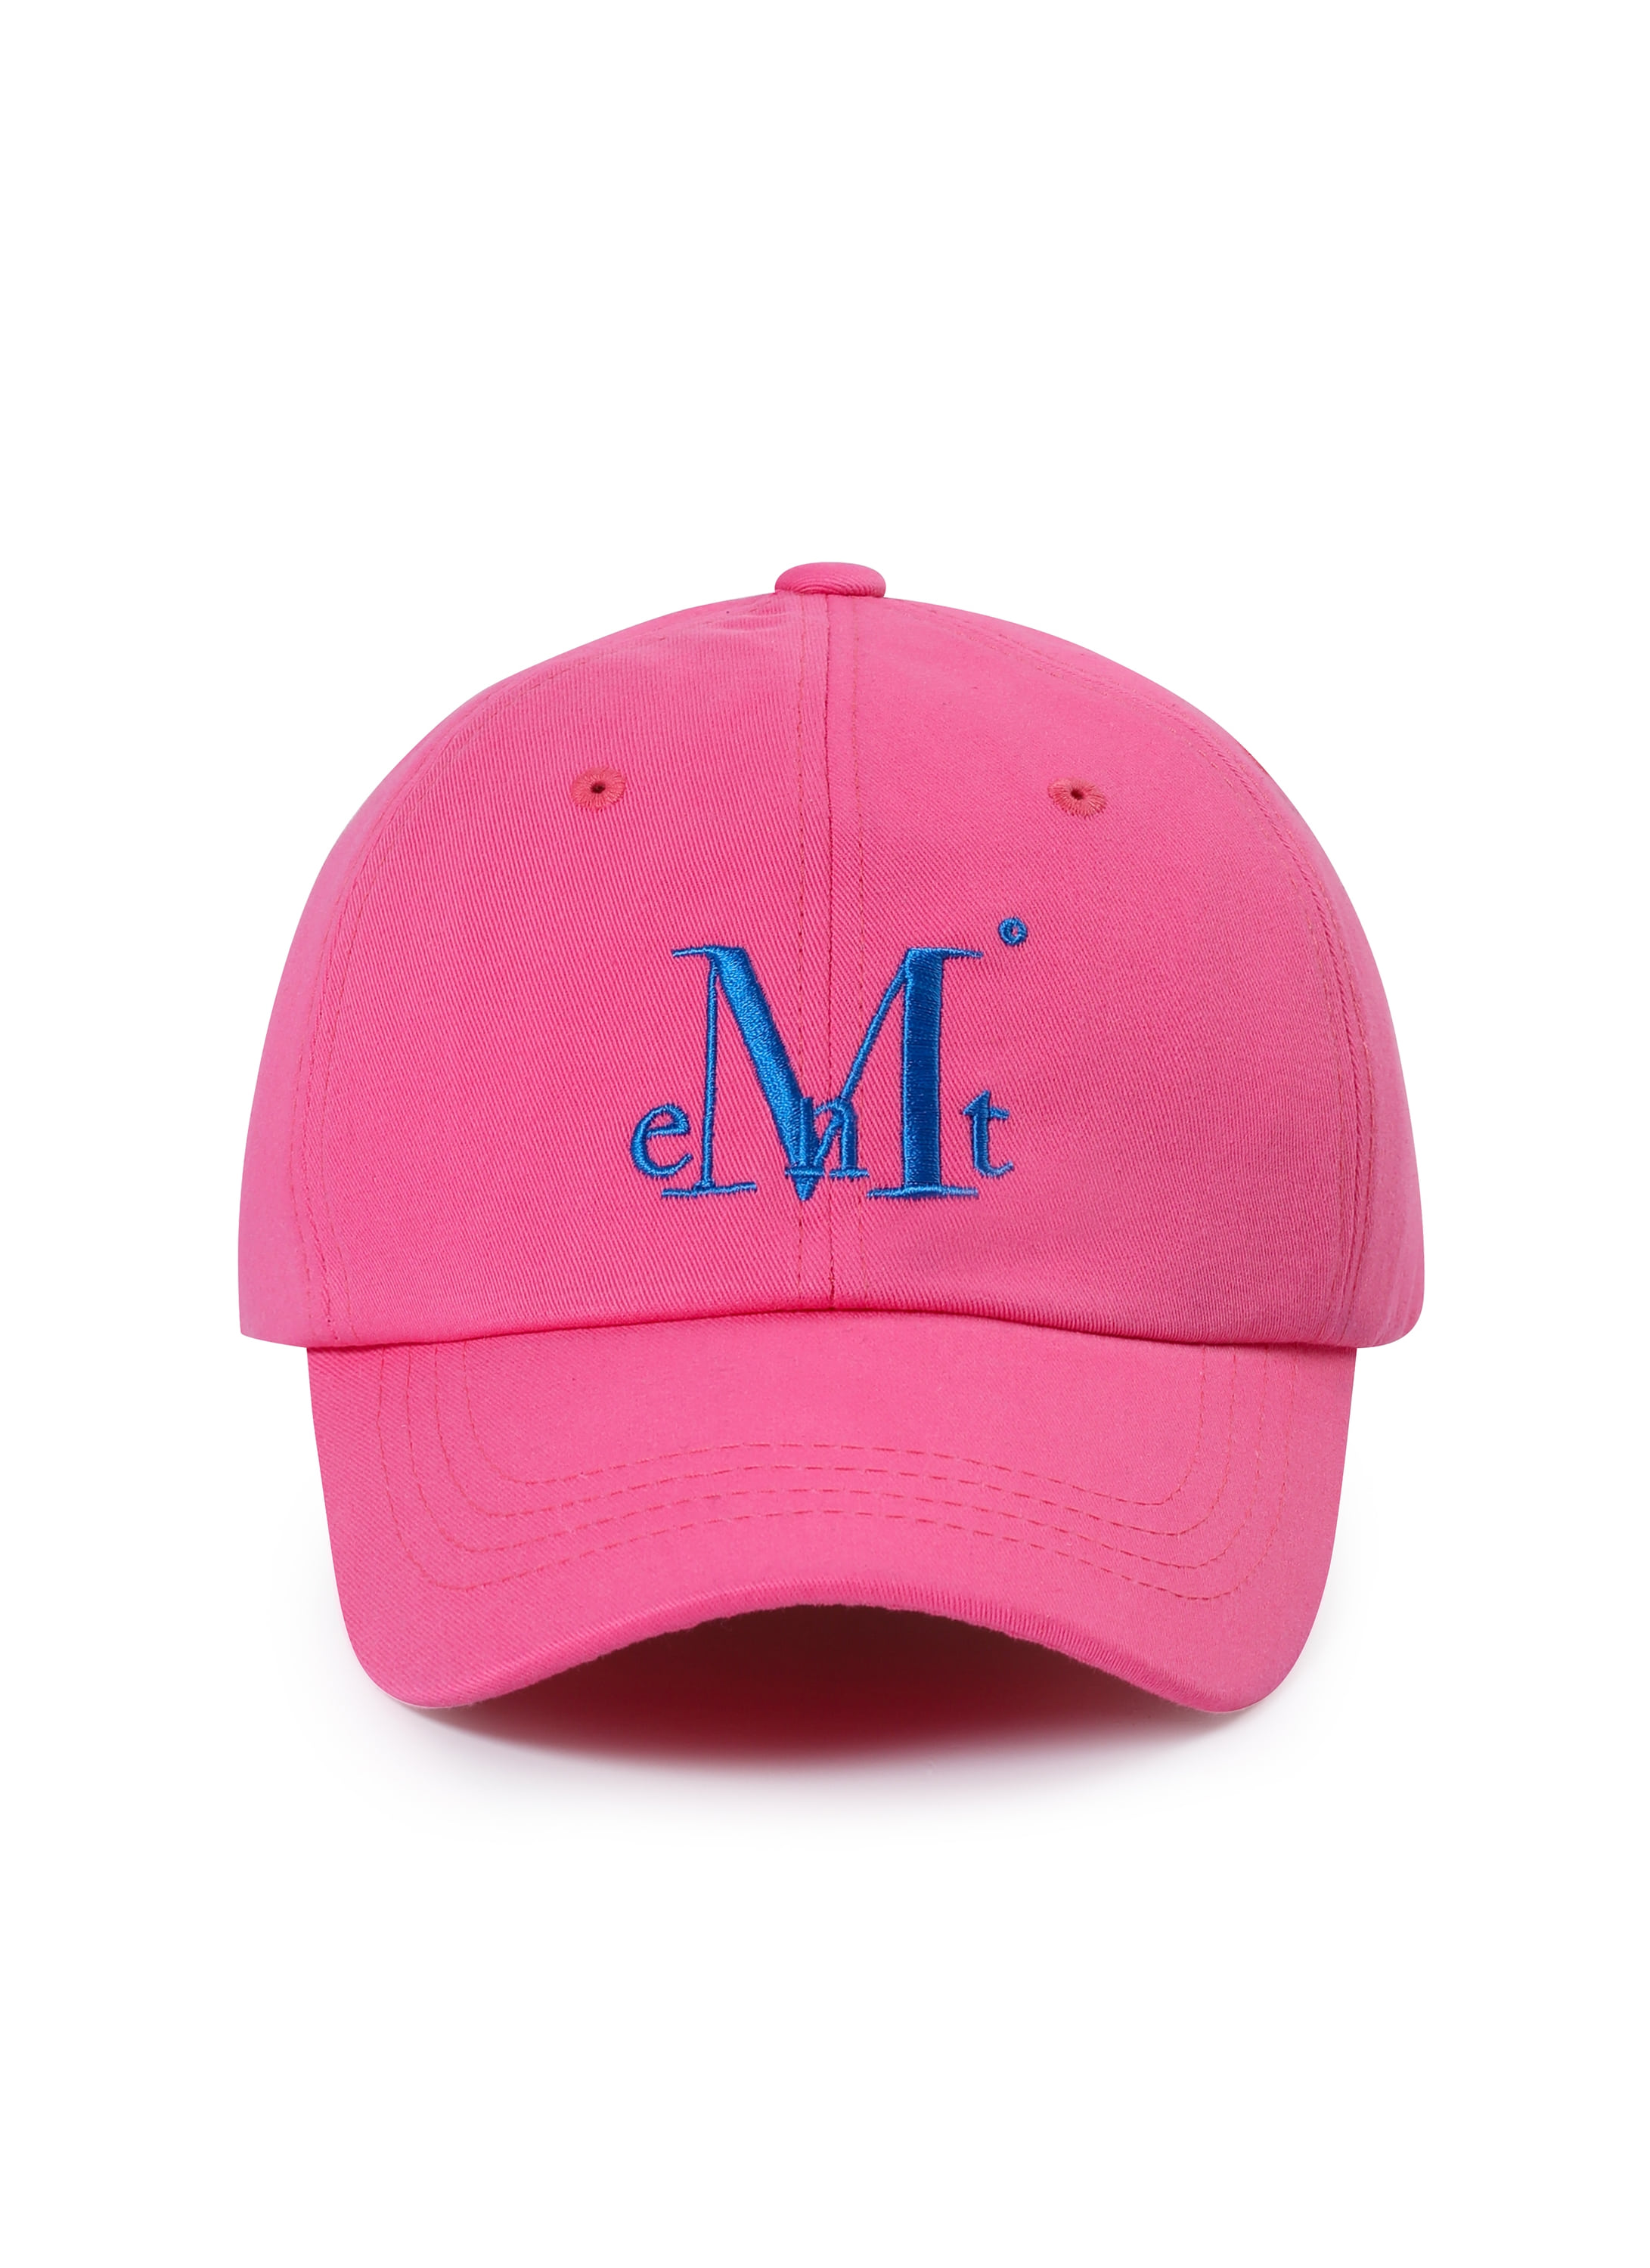 SIGNATURE BALL CAP (Pink blue)